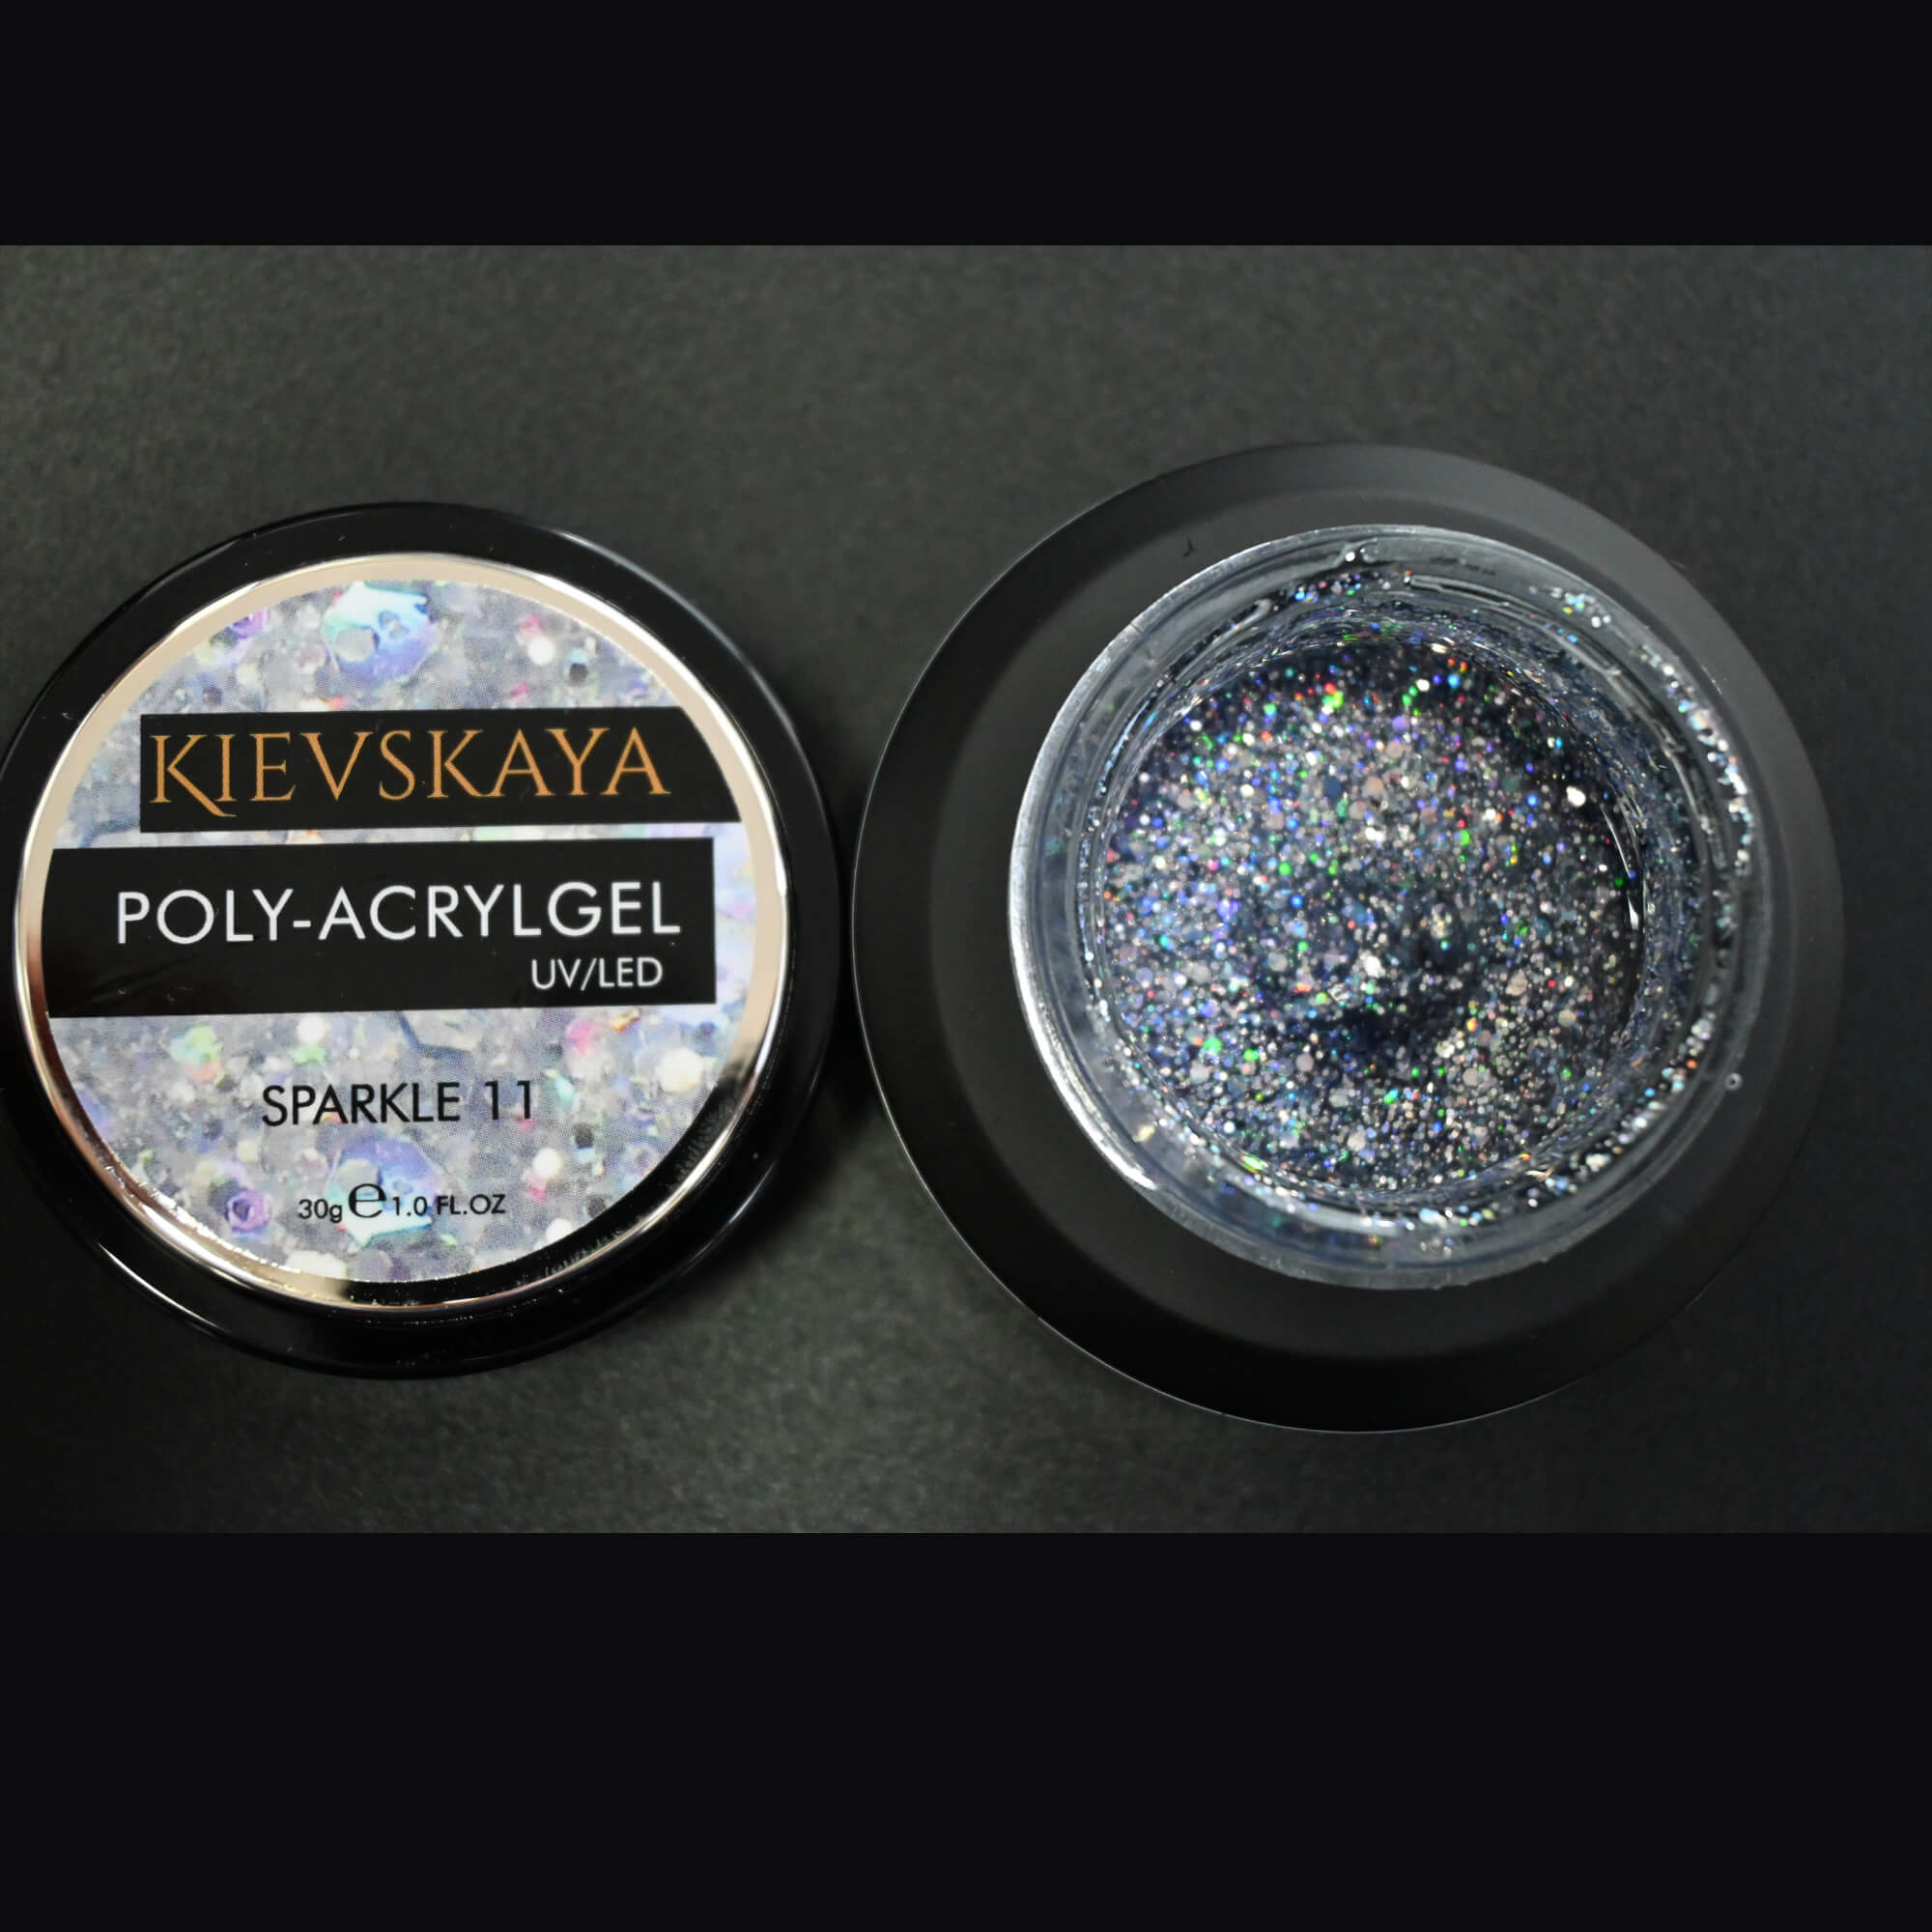 Poly-Acrylgel Sparkle Kievskaya 30gr-SPARKLE11 - SPARKLE11 - Everin.ro